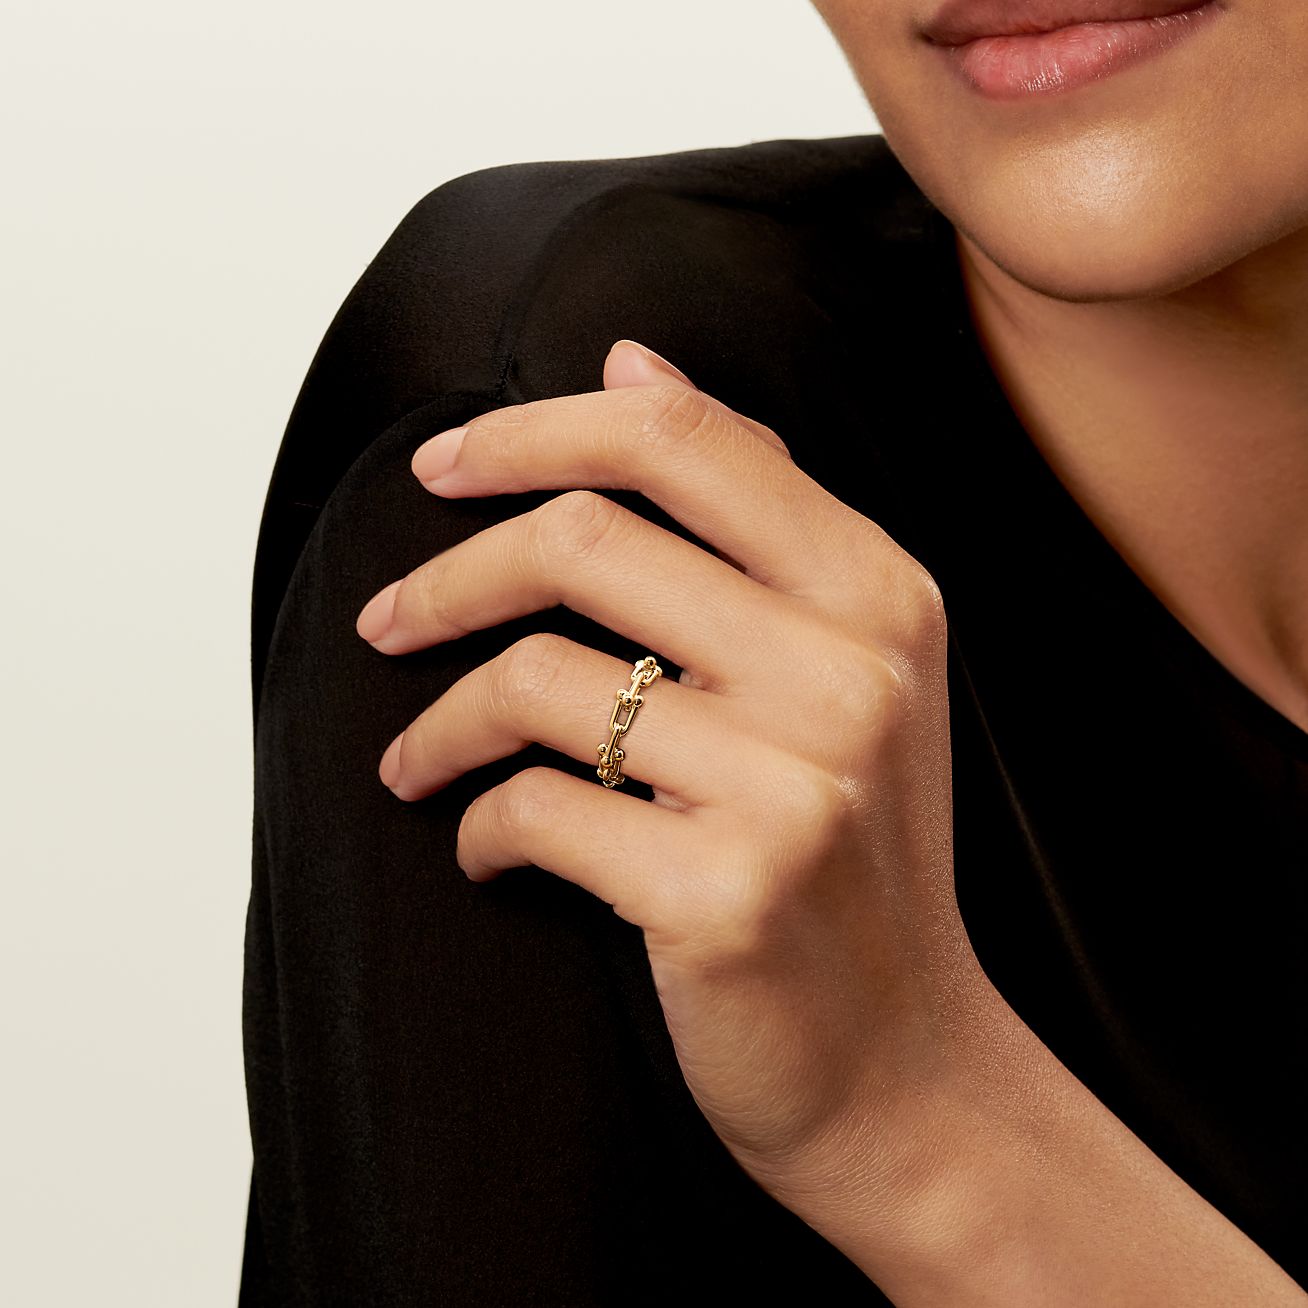 Tiffany HardWear Micro Link Ring in Yellow Gold | Tiffany & Co.